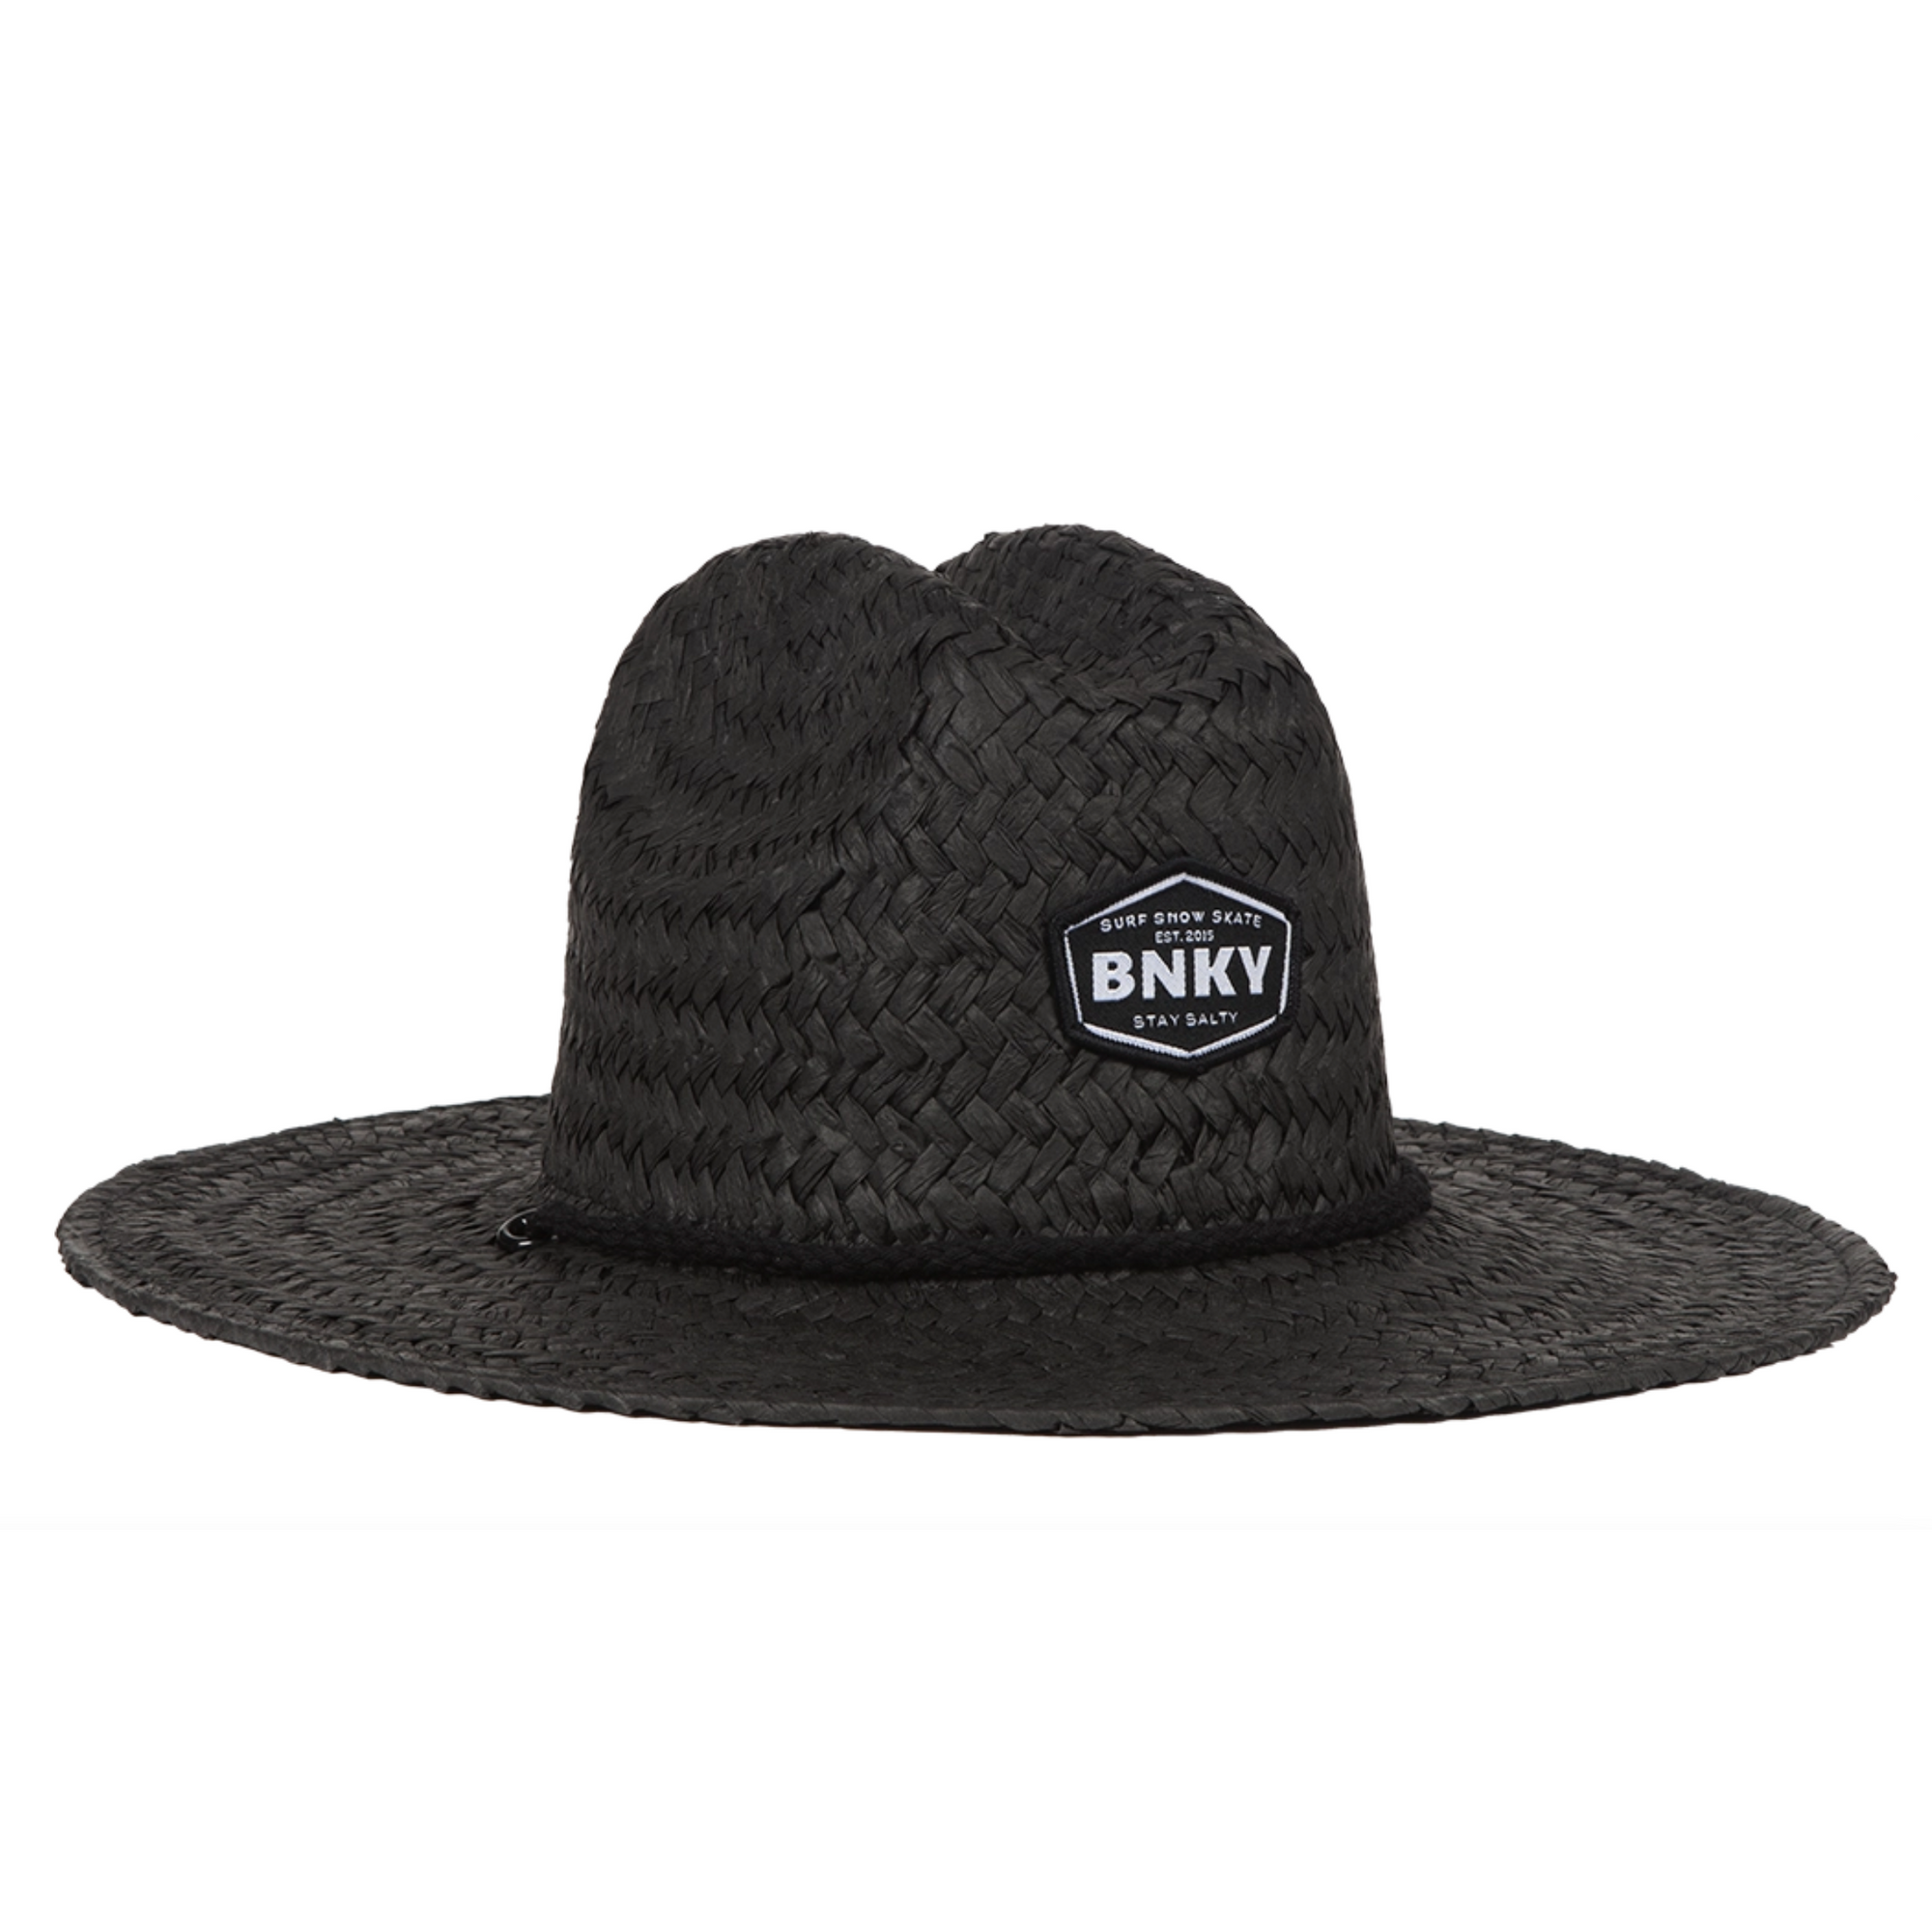 barney patrol (twilight) straw hat